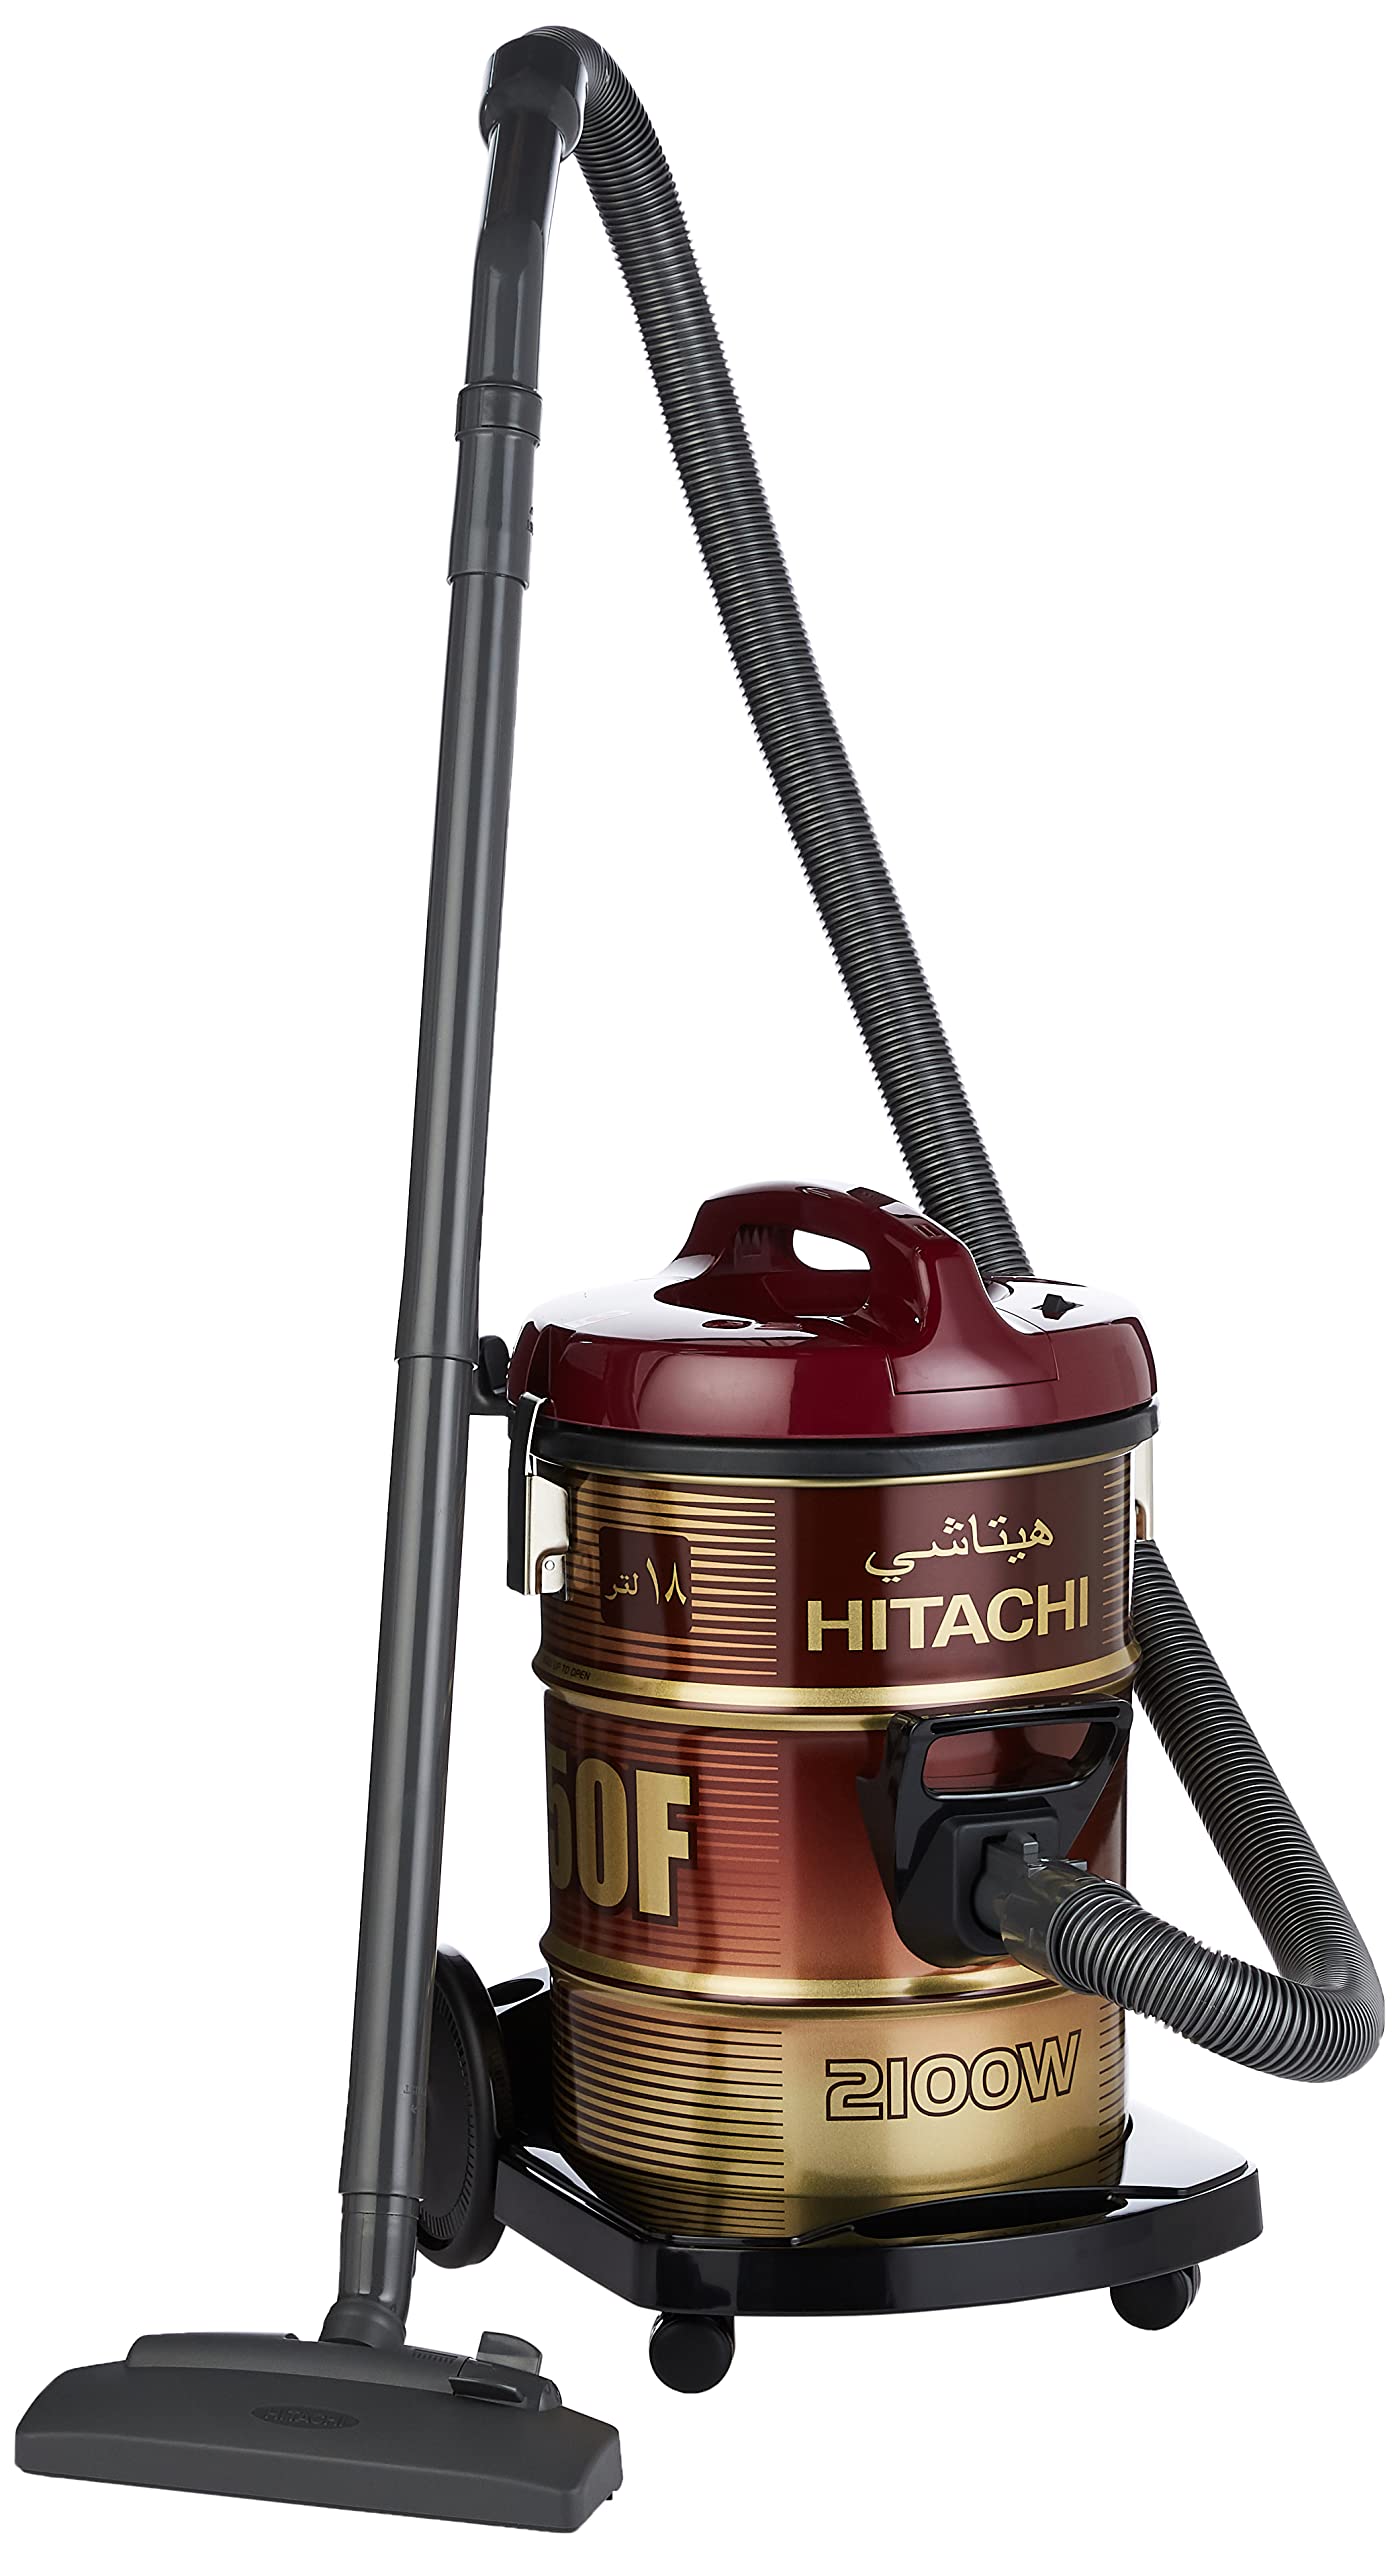 Hitachi Drum Vacuum Cleaner 2100 Watts, 18 Liters Tank Dust Capacity With 7.8M Extra Long Power Code, Removable & Washable Filter مكنسة برميل بقوة 2100 واط ولون احمر نبيذي من هيتاشي